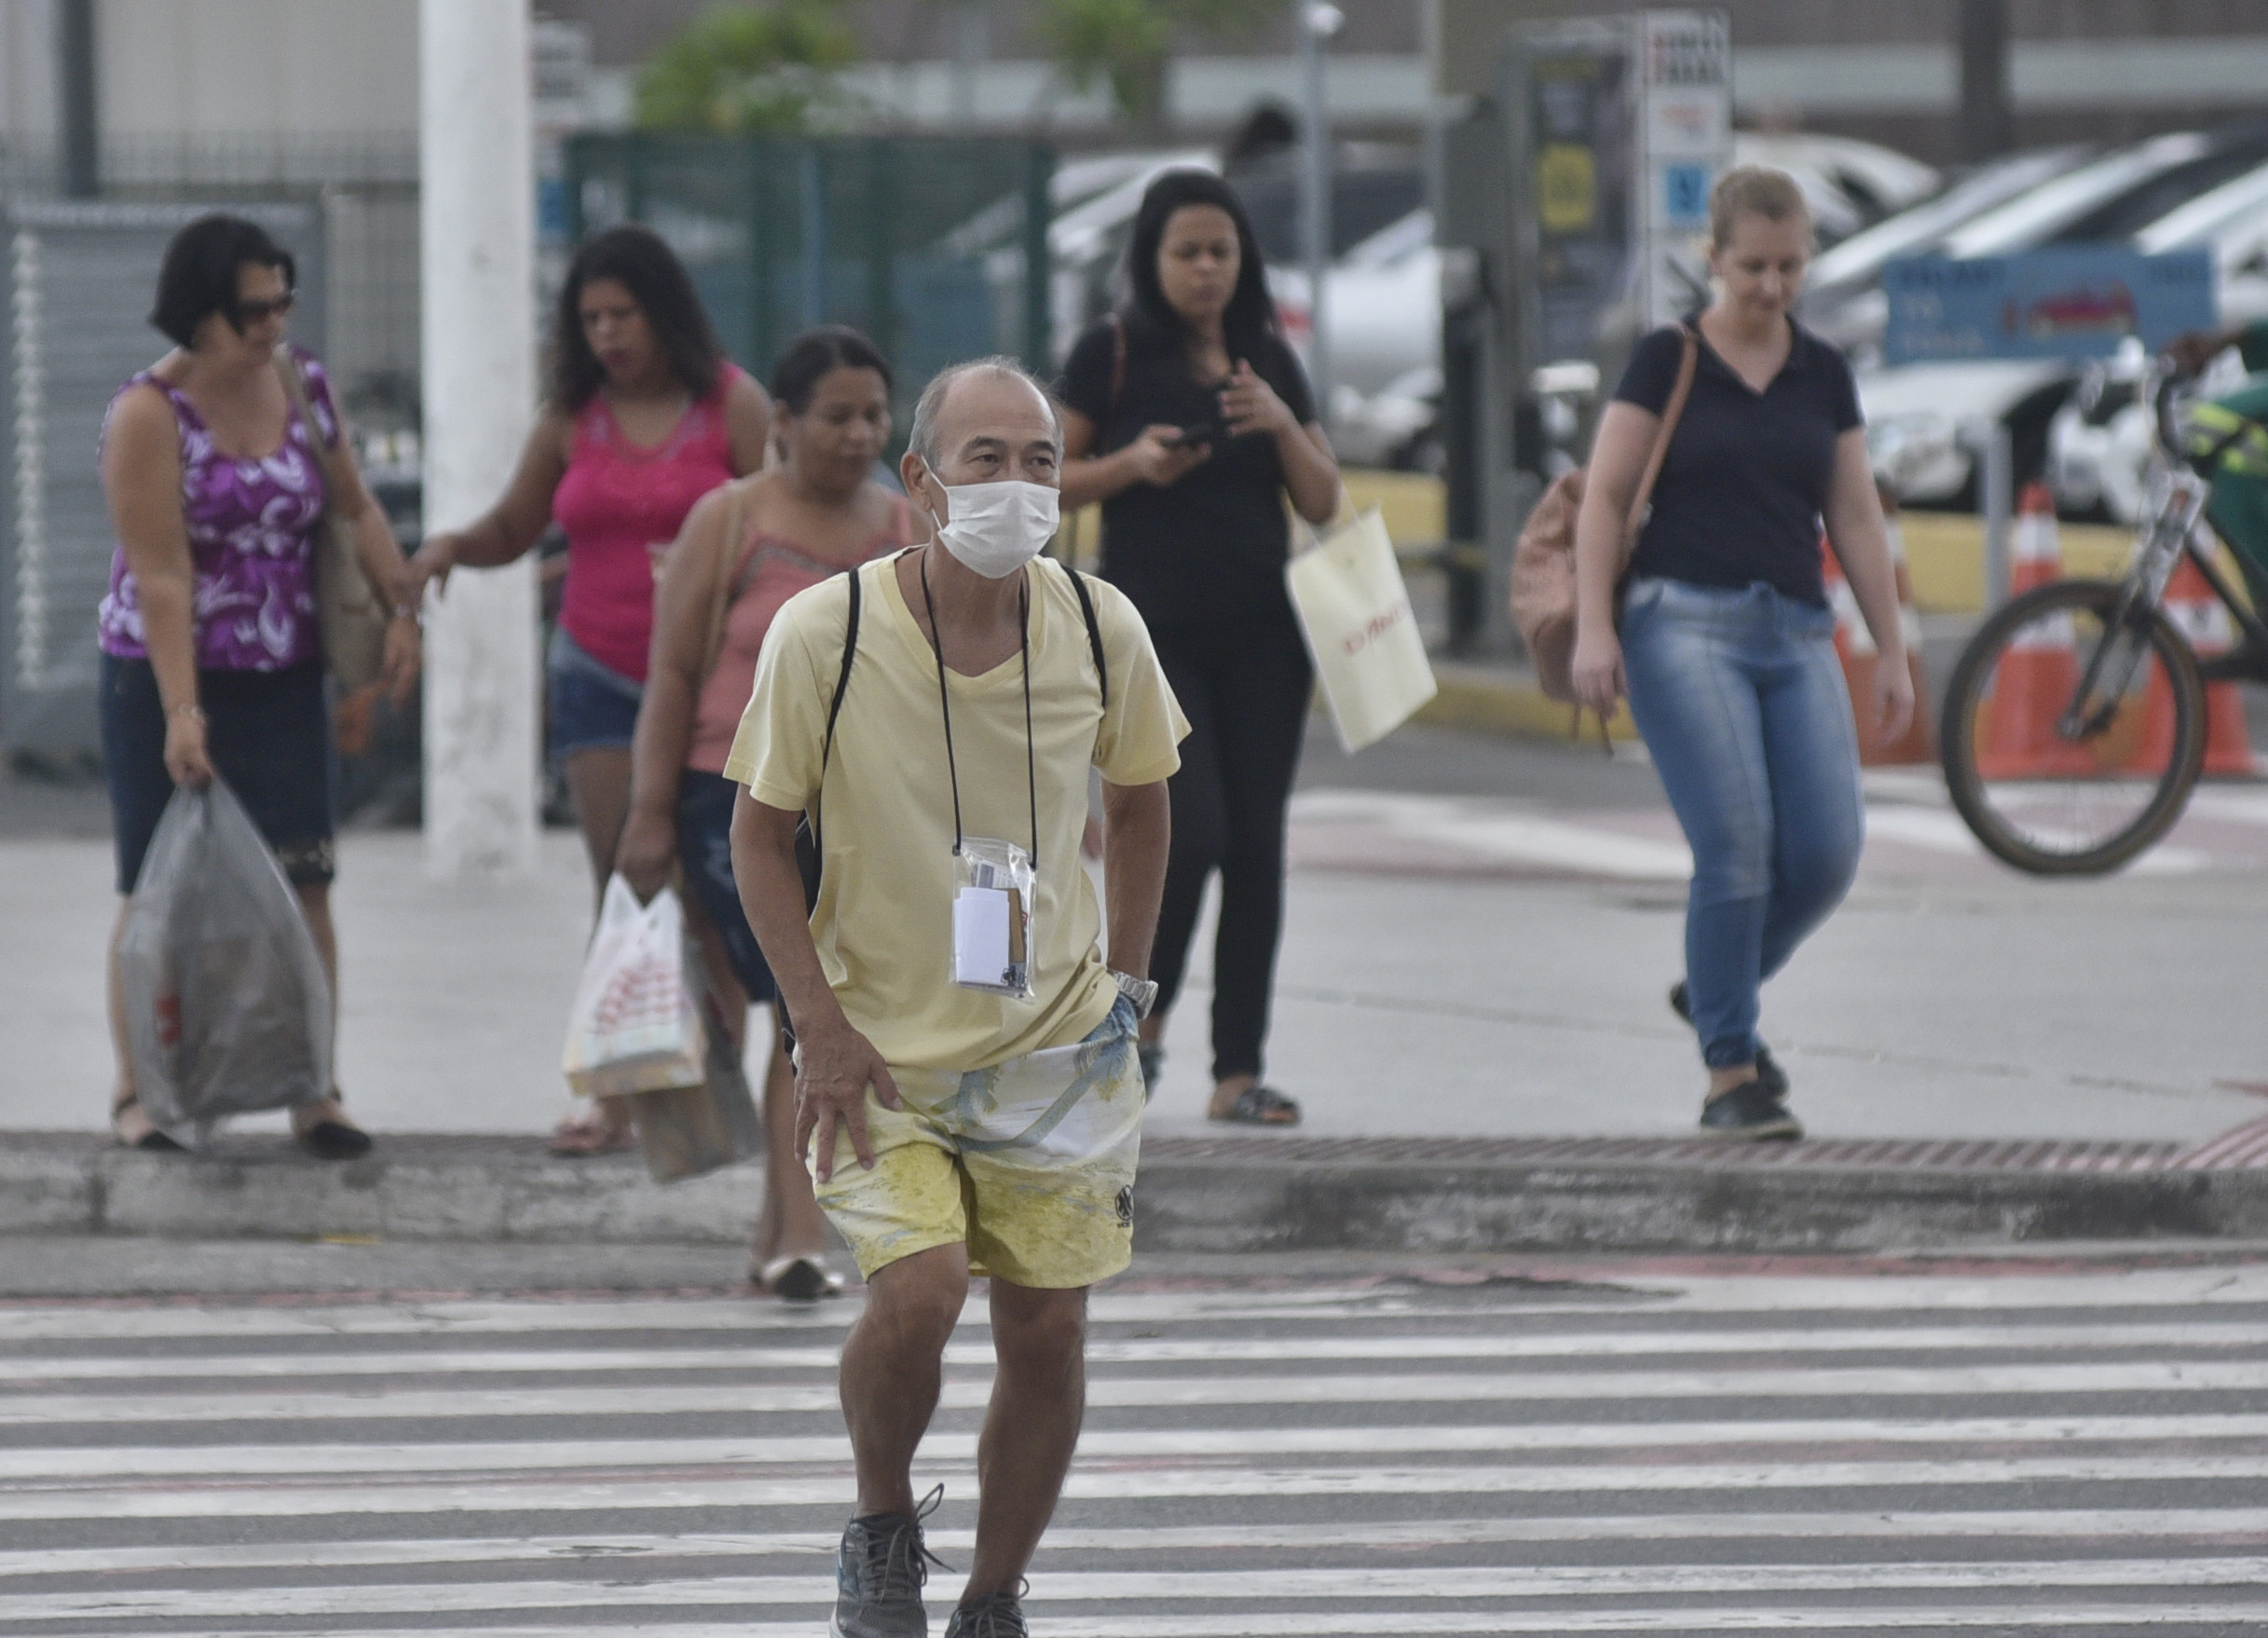 Data: 17/03/2020 - ES - Vitória - Após pandemia de coronavírus pedestre usa máscara na avenida Américo Buaiz - Editoria: Cidades - Foto: VItor Jubini - GZ